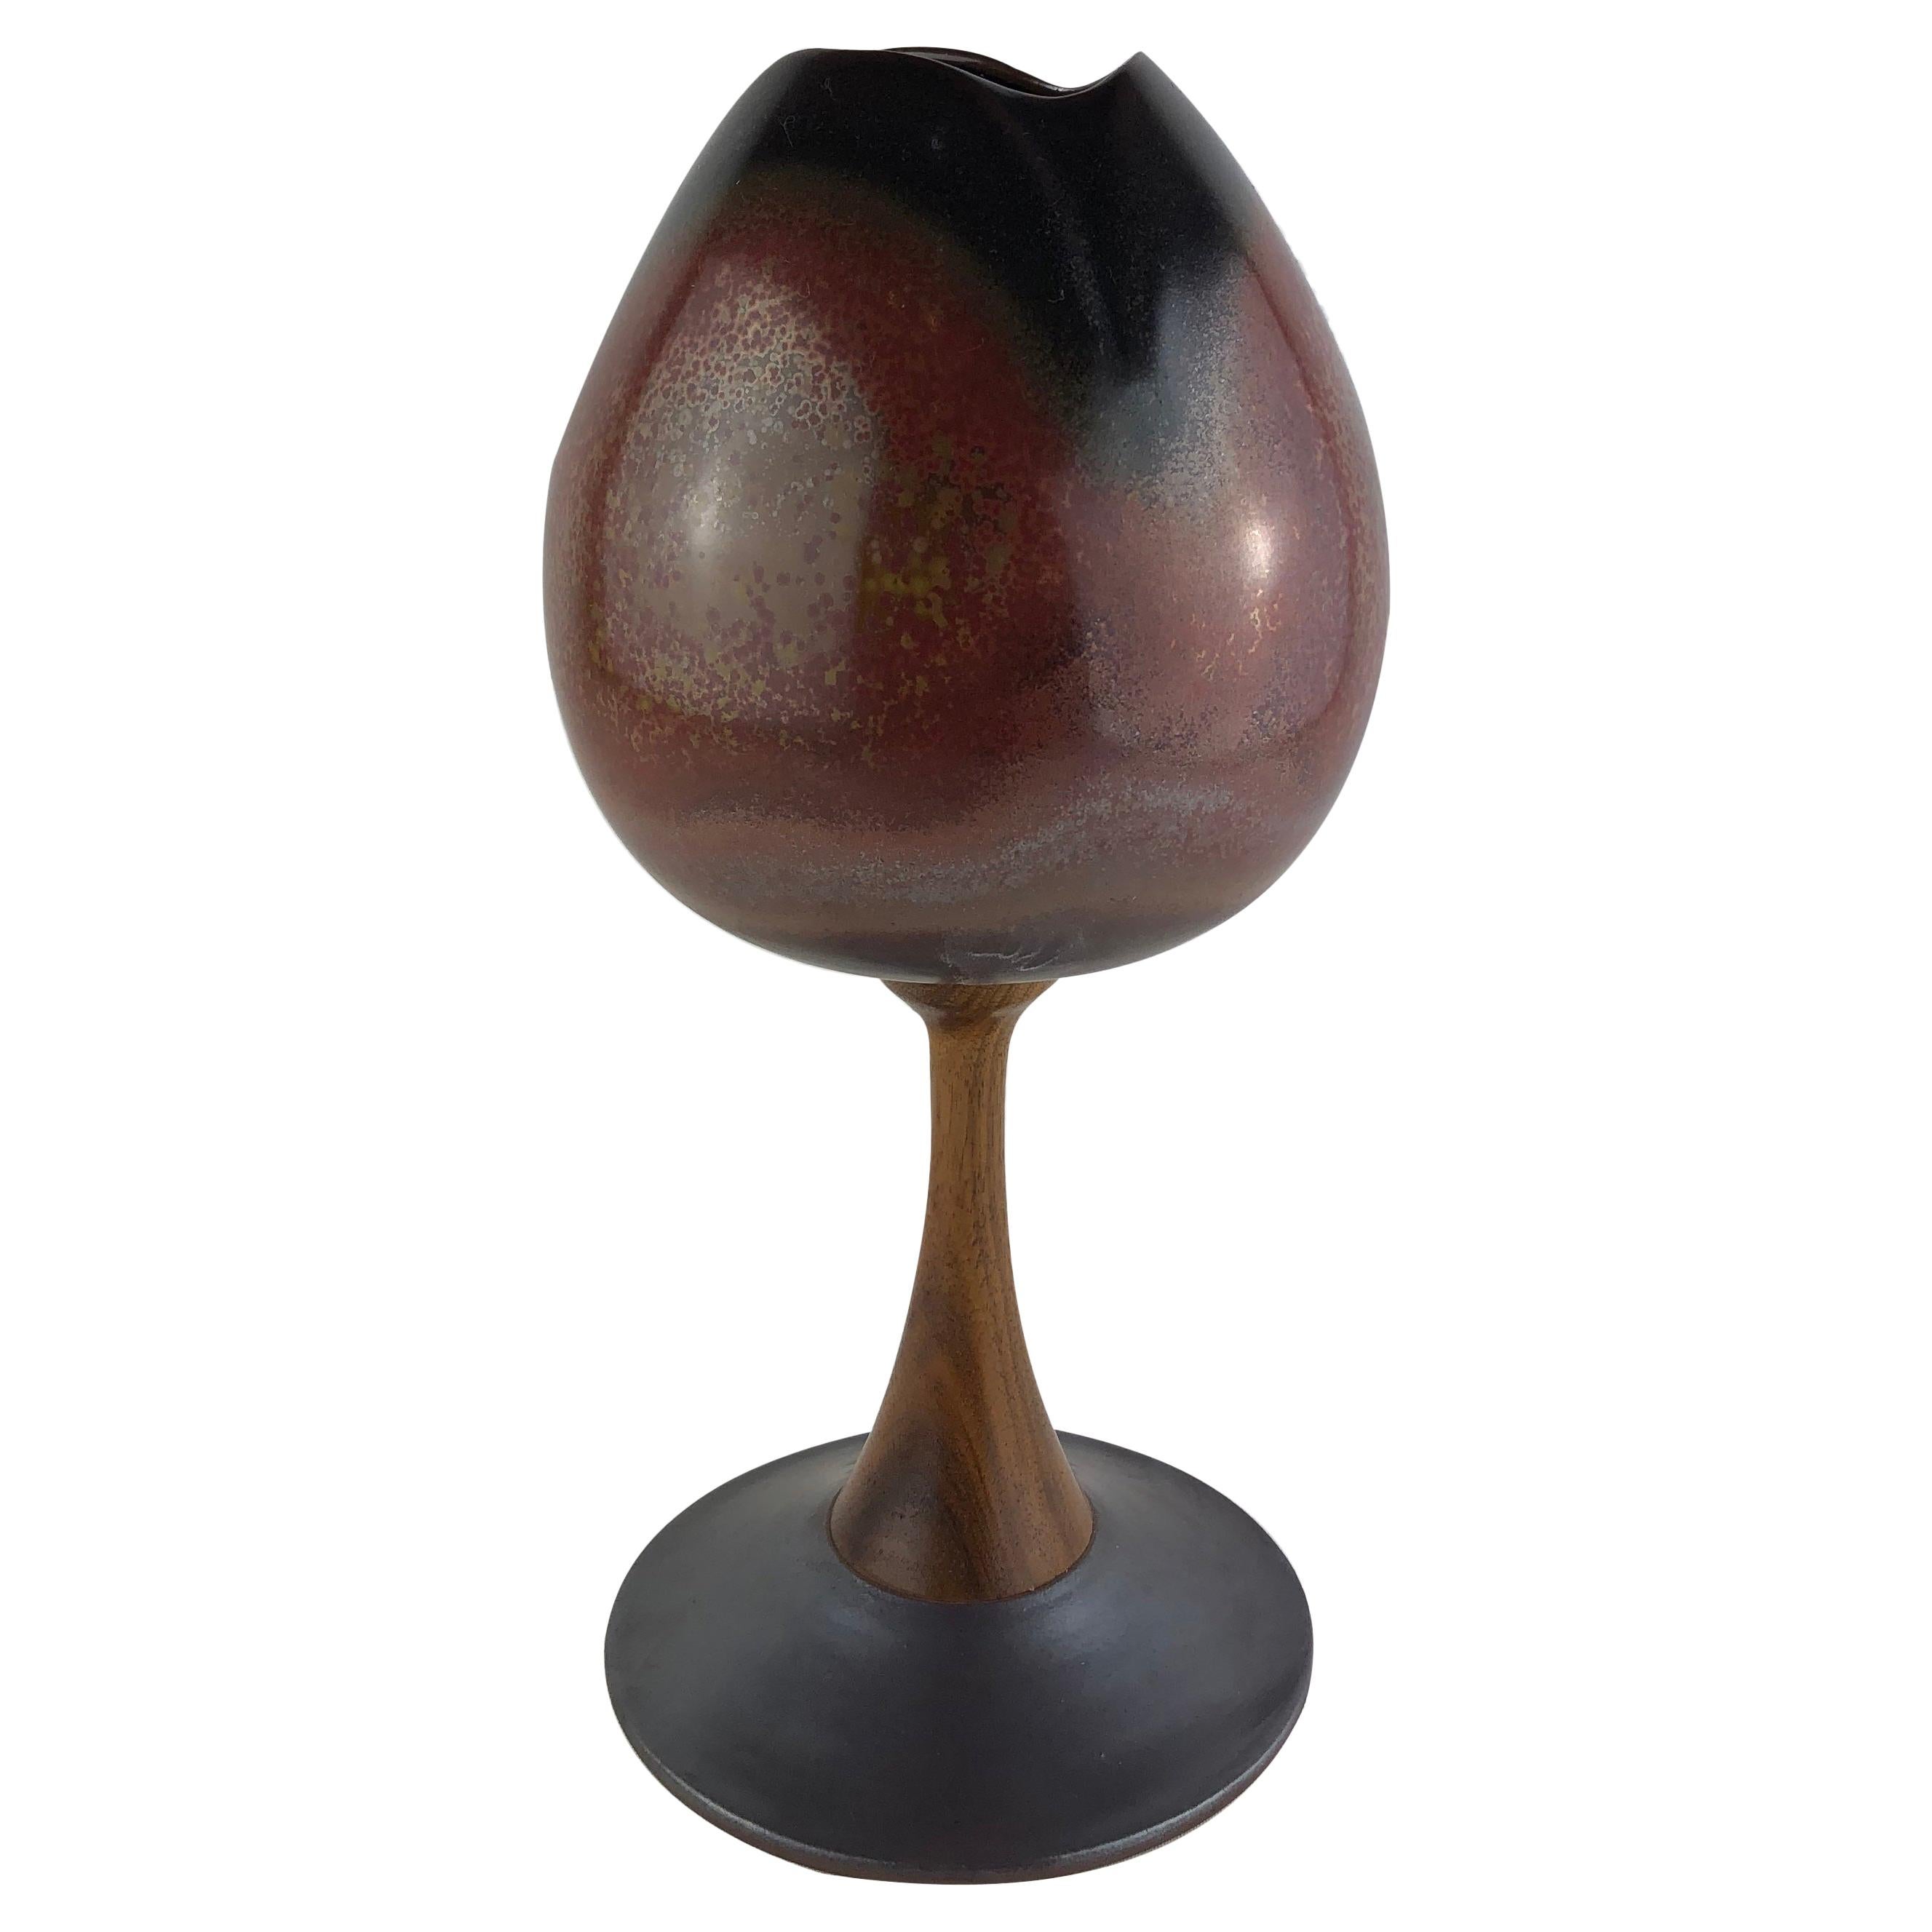 Tulip Shaped Ceramic Vase with Wooden and Metal Base, Manner of Berndt Friberg